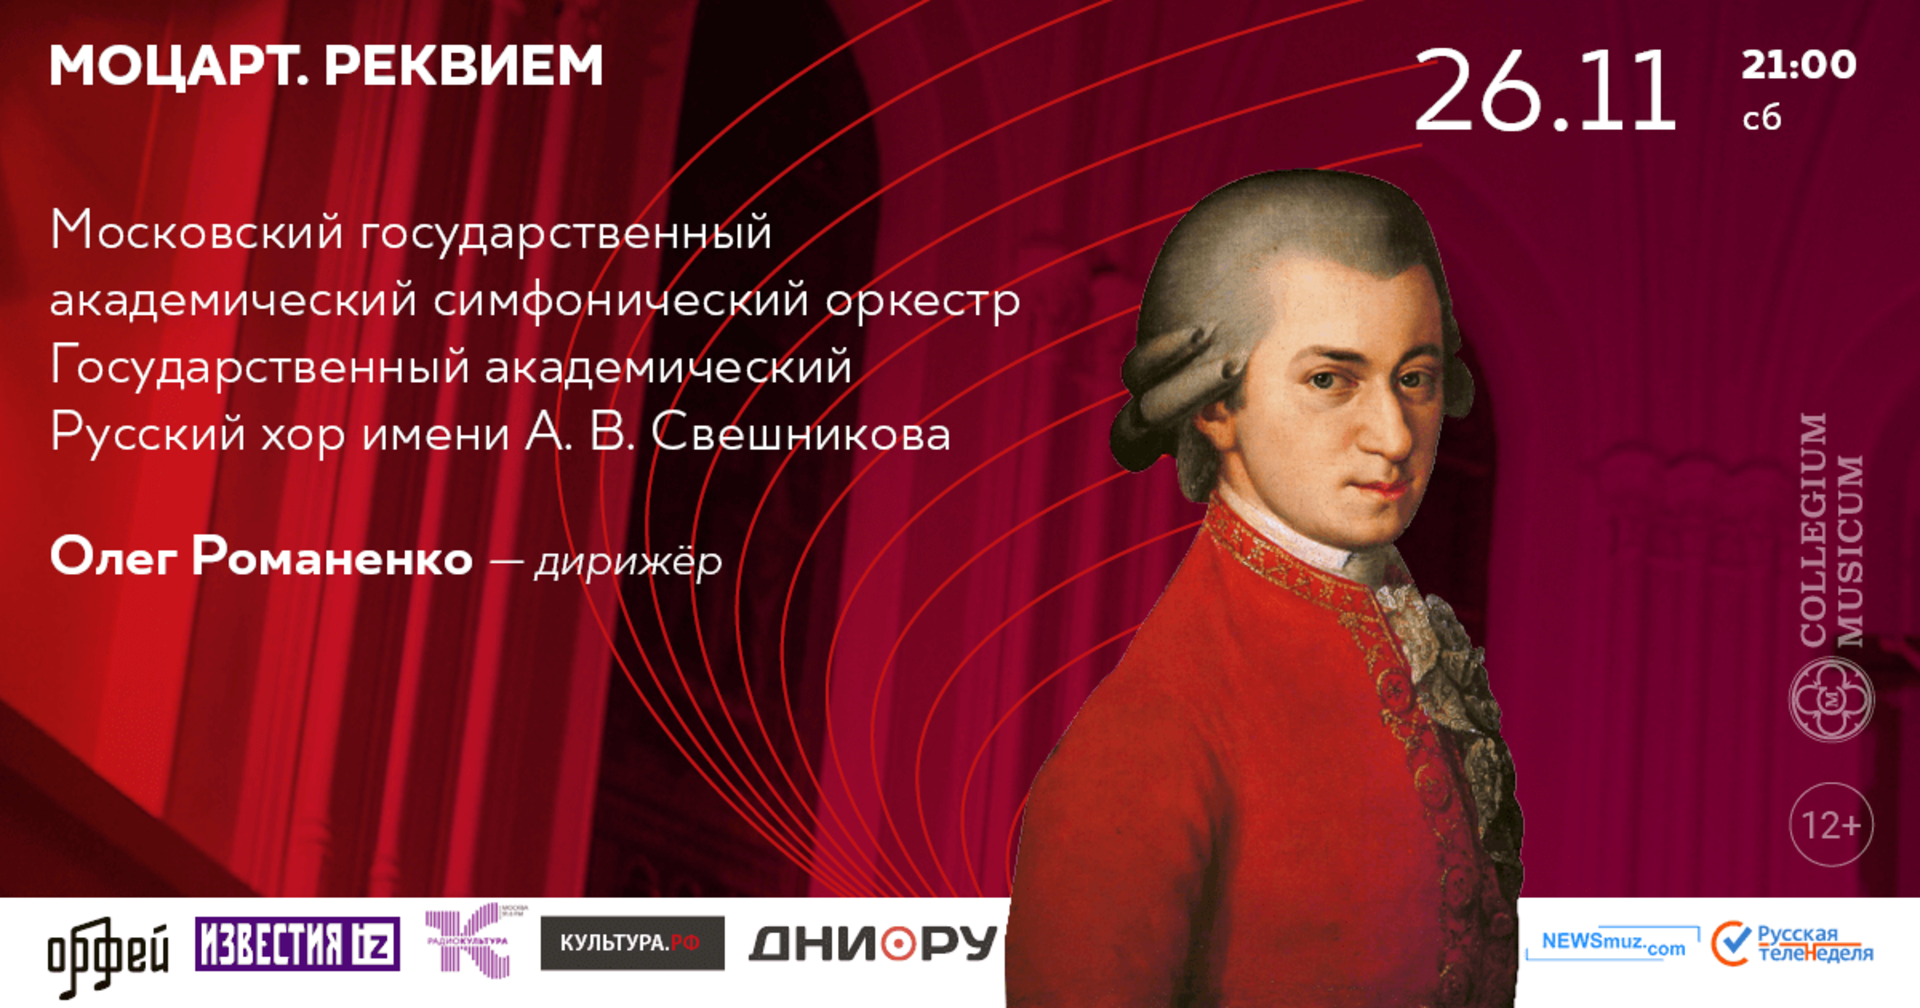 Концерт «Моцарт. Реквием». Название всех частей Реквиема Моцарта. Сколько частей в реквиеме Моцарта. 12 Часть Реквием Моцарта.